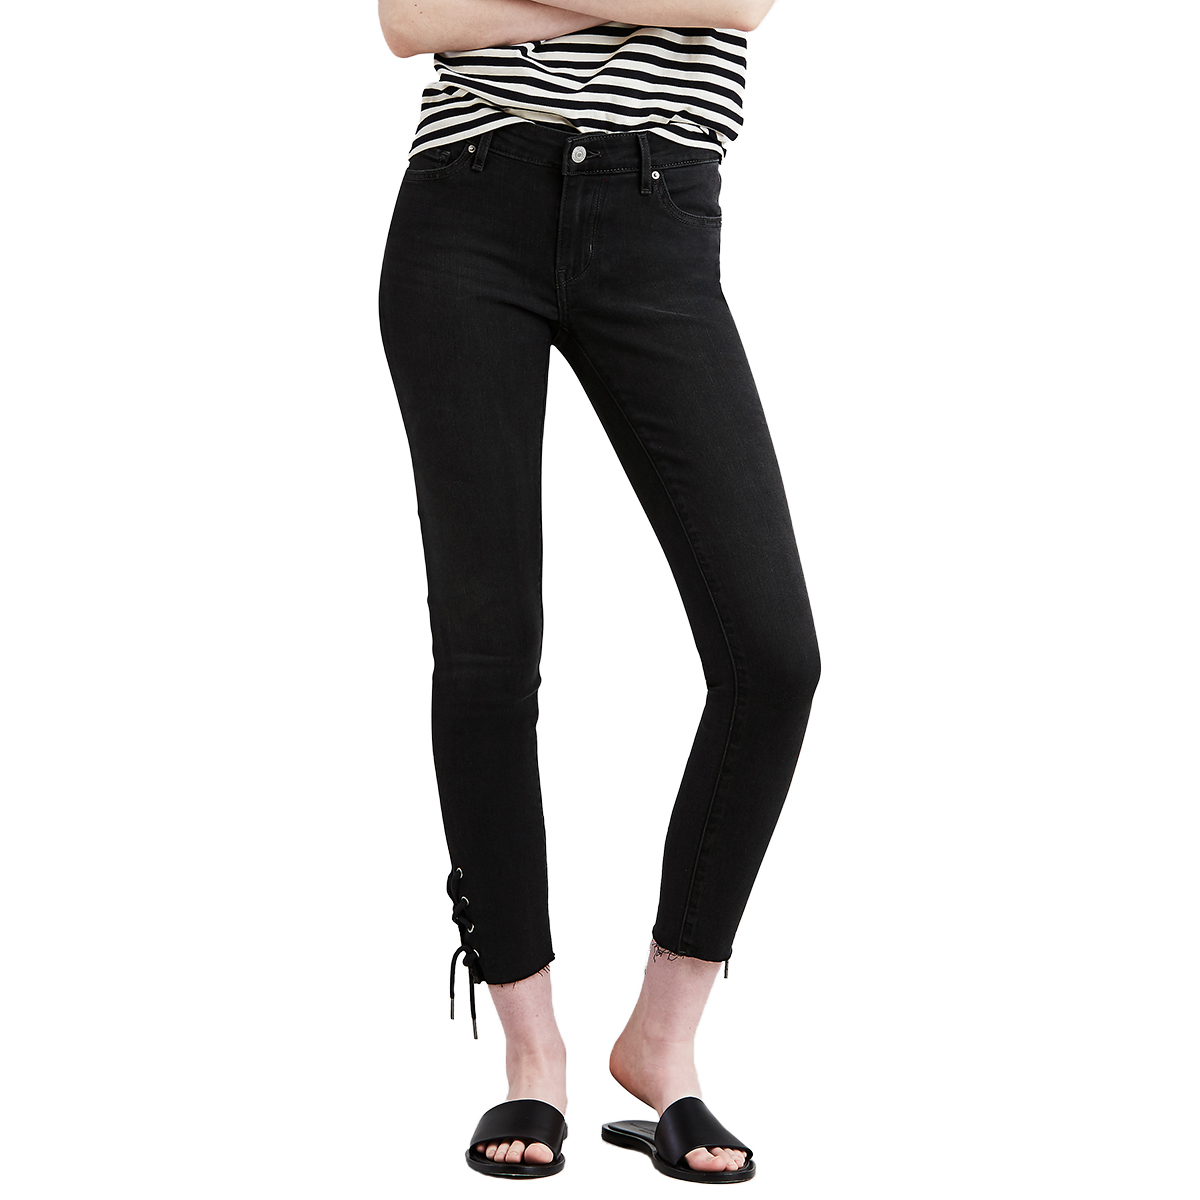 Levi's Women's 711 Lace-Up Skinny Jeans - Black, 30